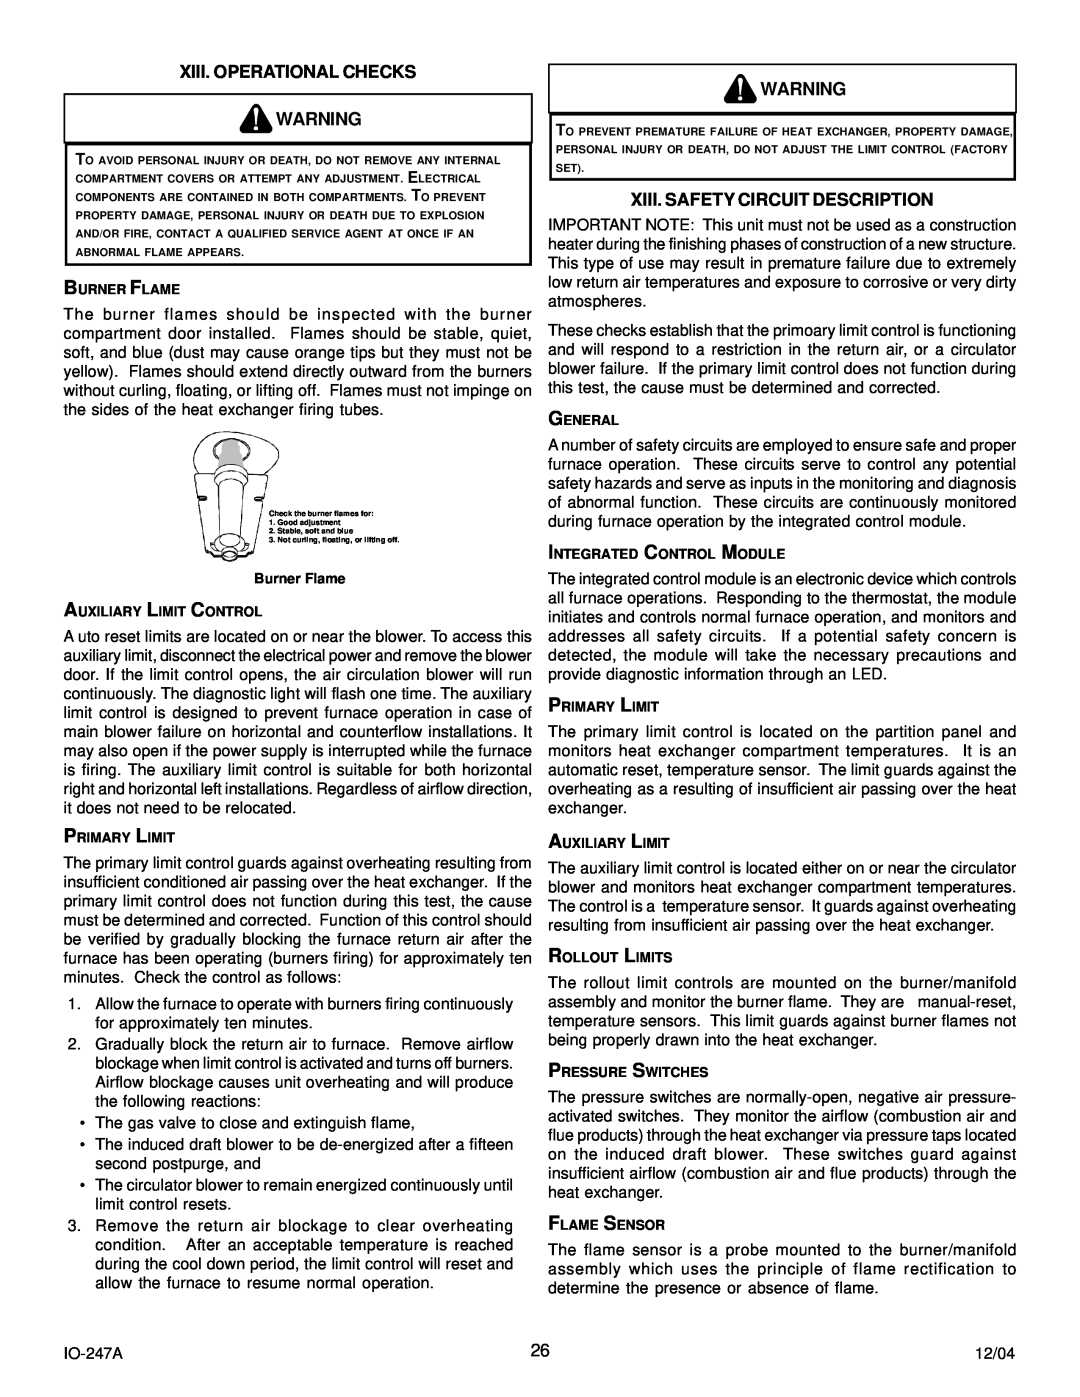 Goodman Mfg AMV8 instruction manual Xiii. Operational Checks, Xiii. Safety Circuit Description, Burner Flame 